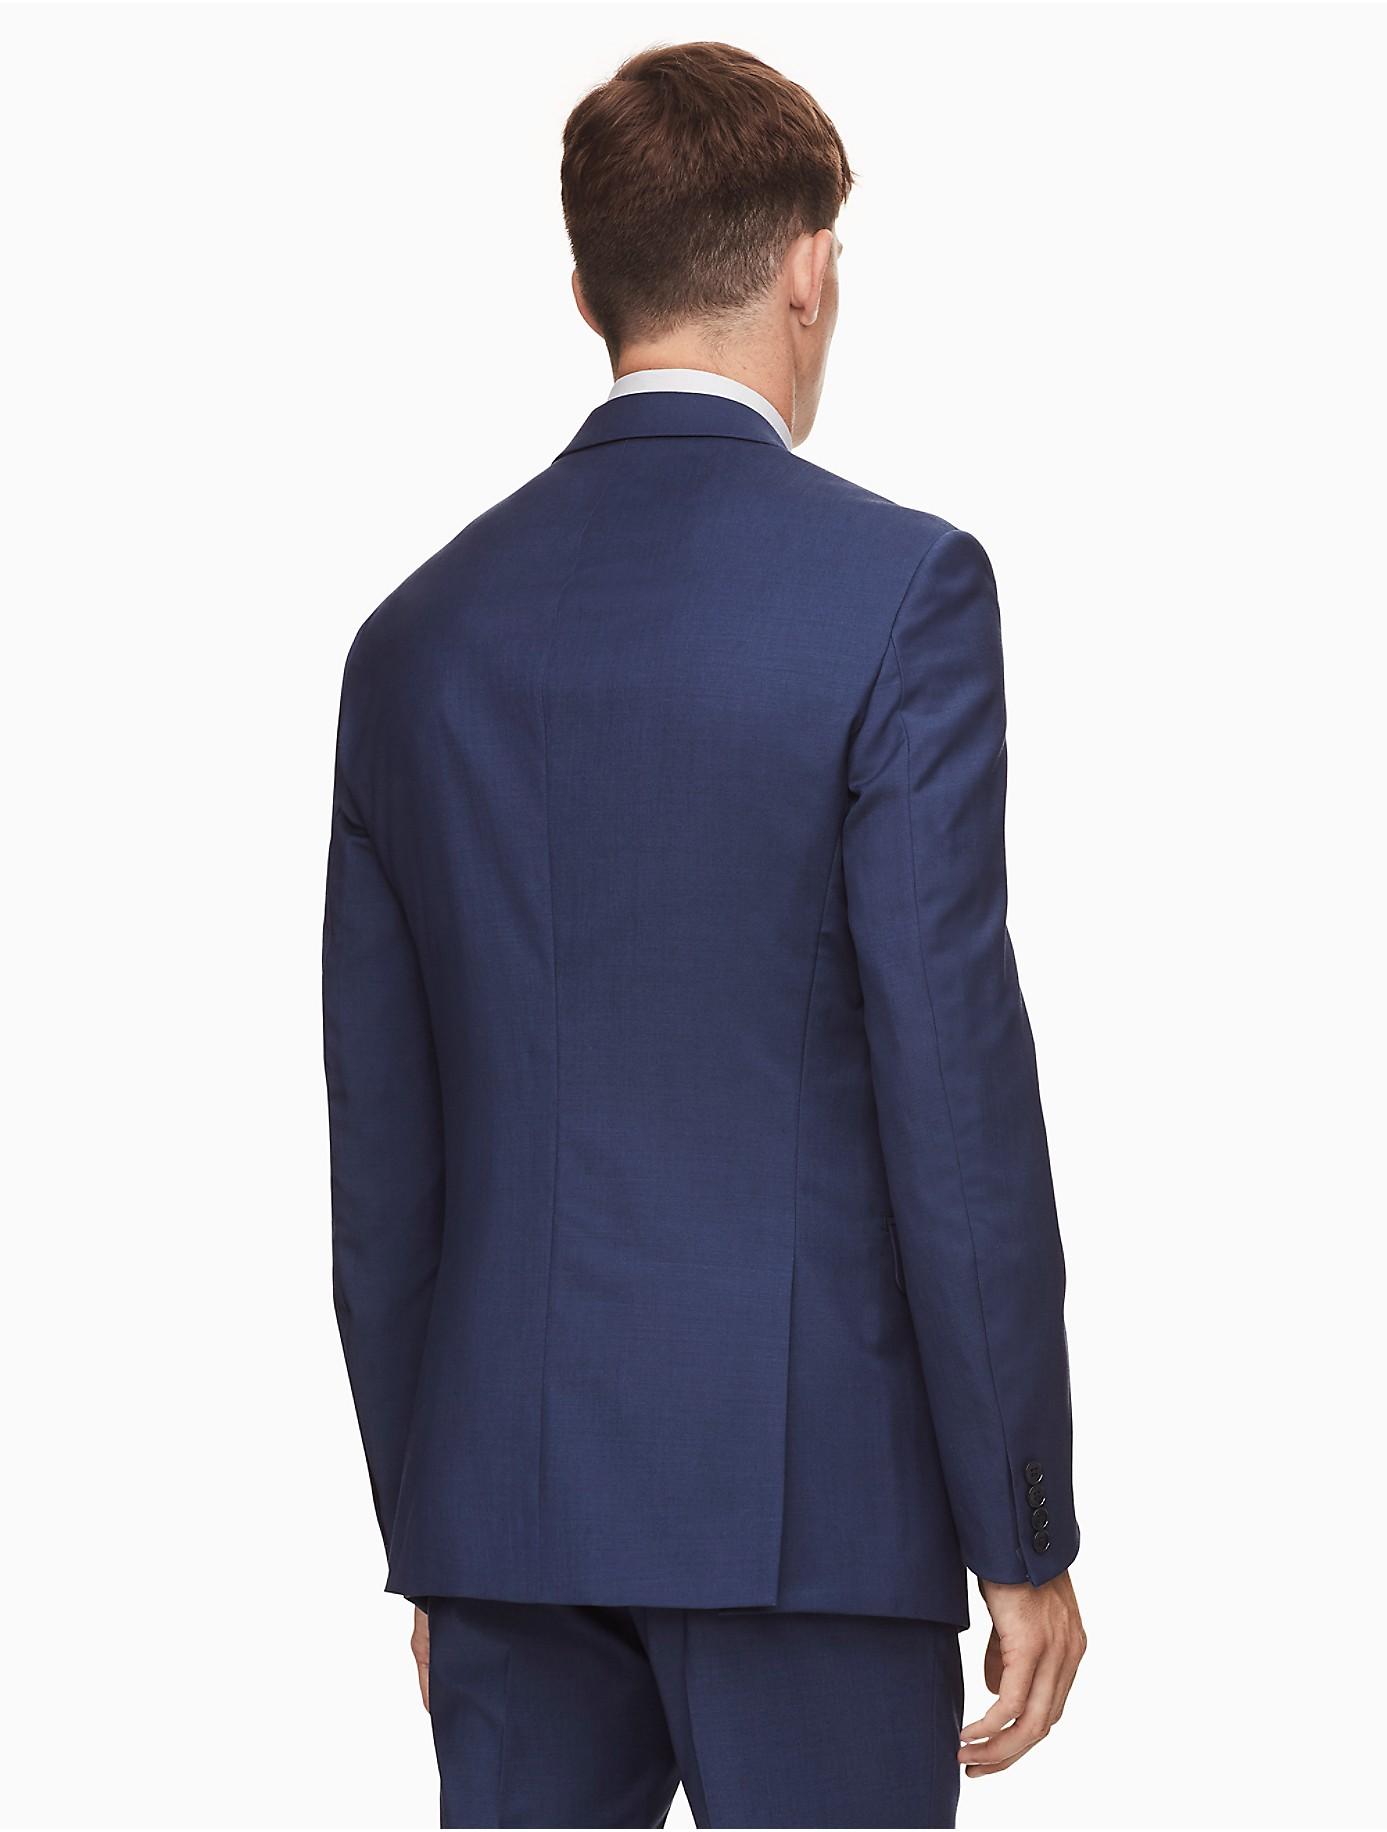 Calvin Klein Wool Slim Fit Blue Suit Jacket for Men - Lyst